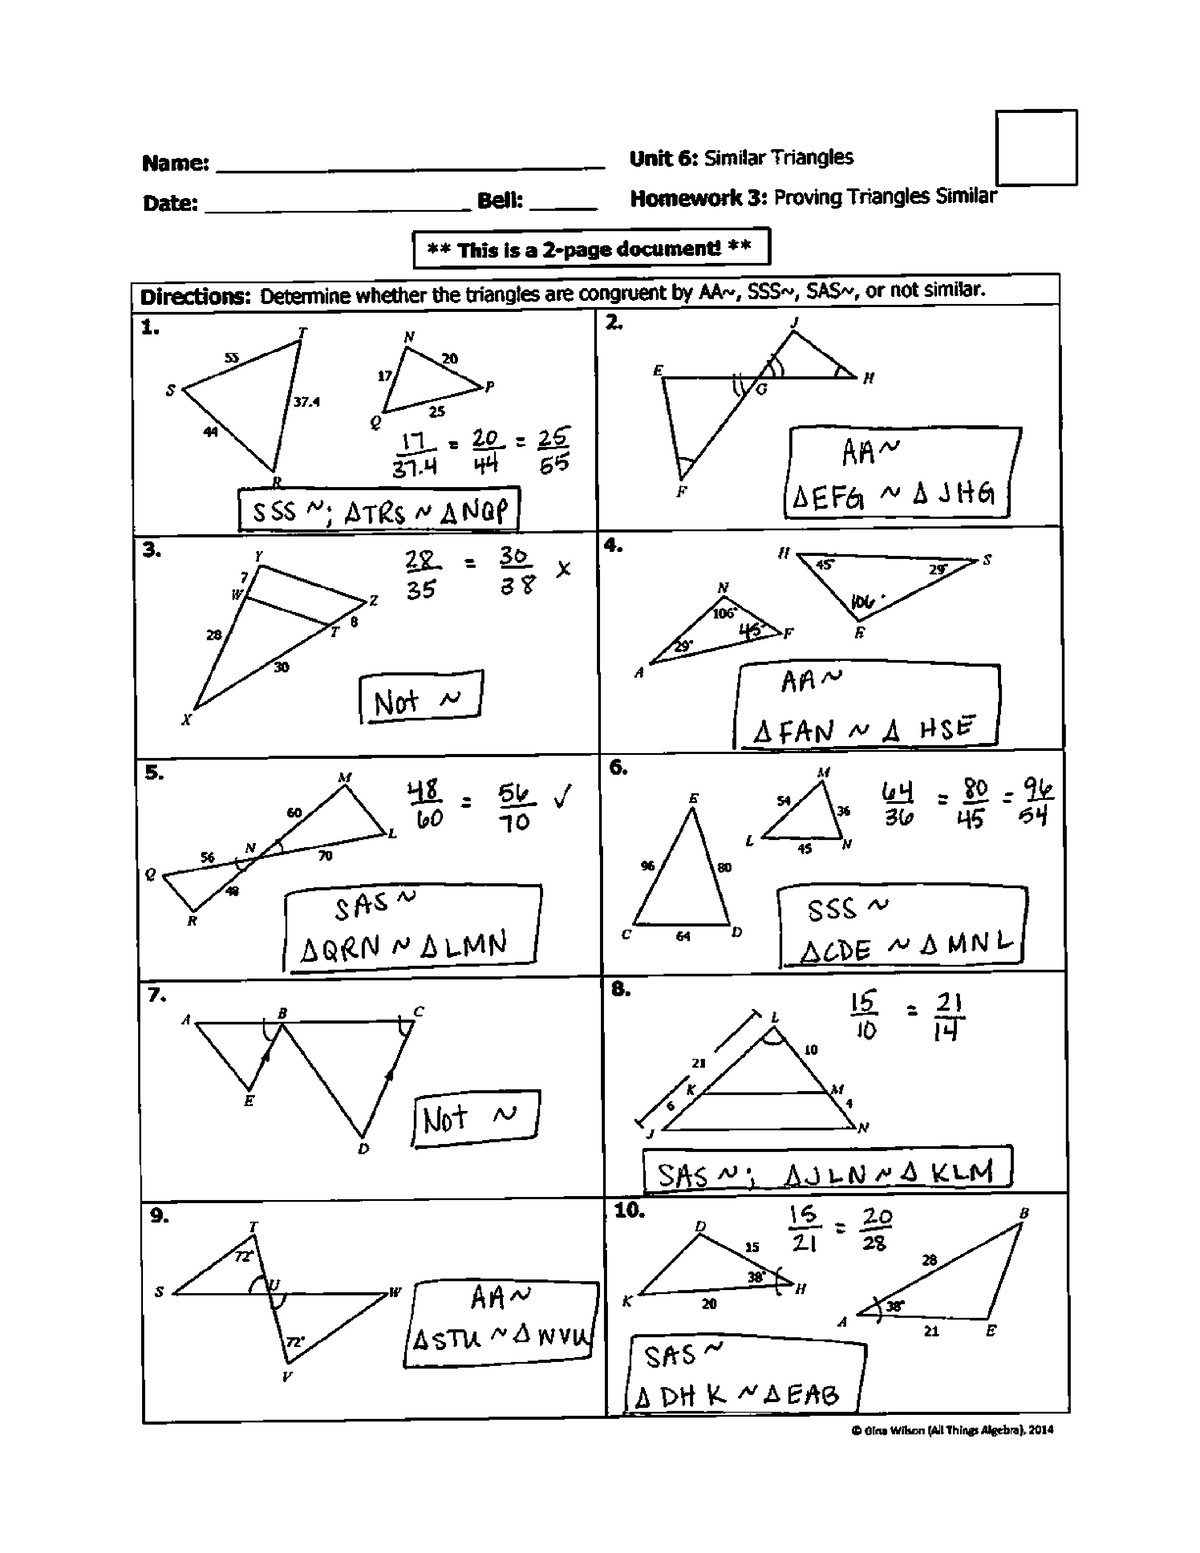 8-homework-3-proving-triangles-similar-key-blaw7-studocu